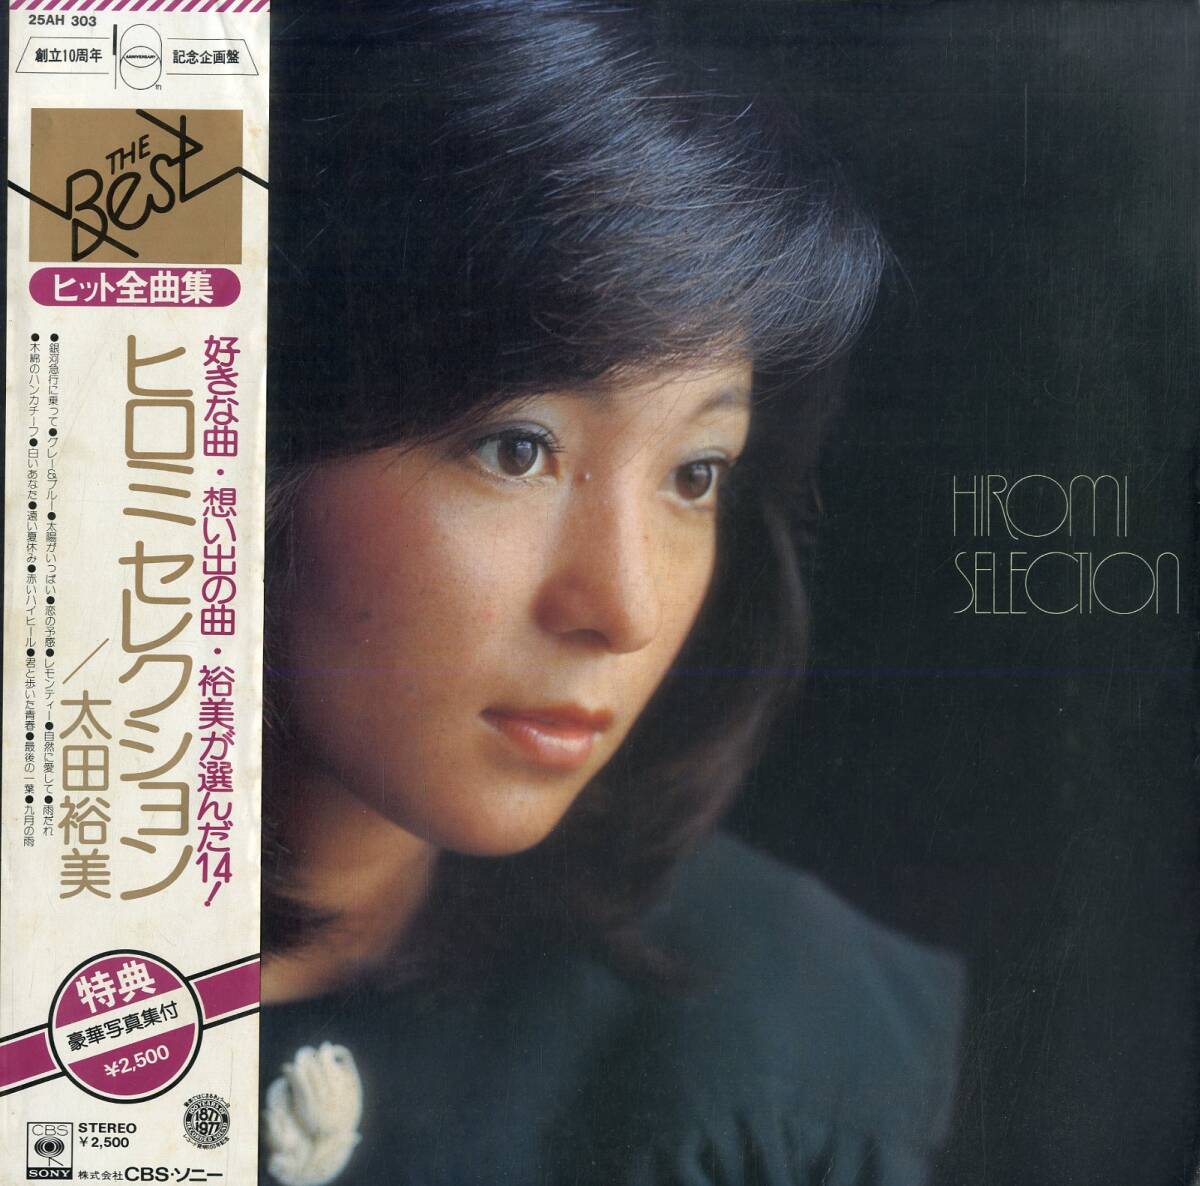 A00567383/LP/太田裕美「Hiromi Selection (1977年・25AH-303・ベストアルバム)」の画像1